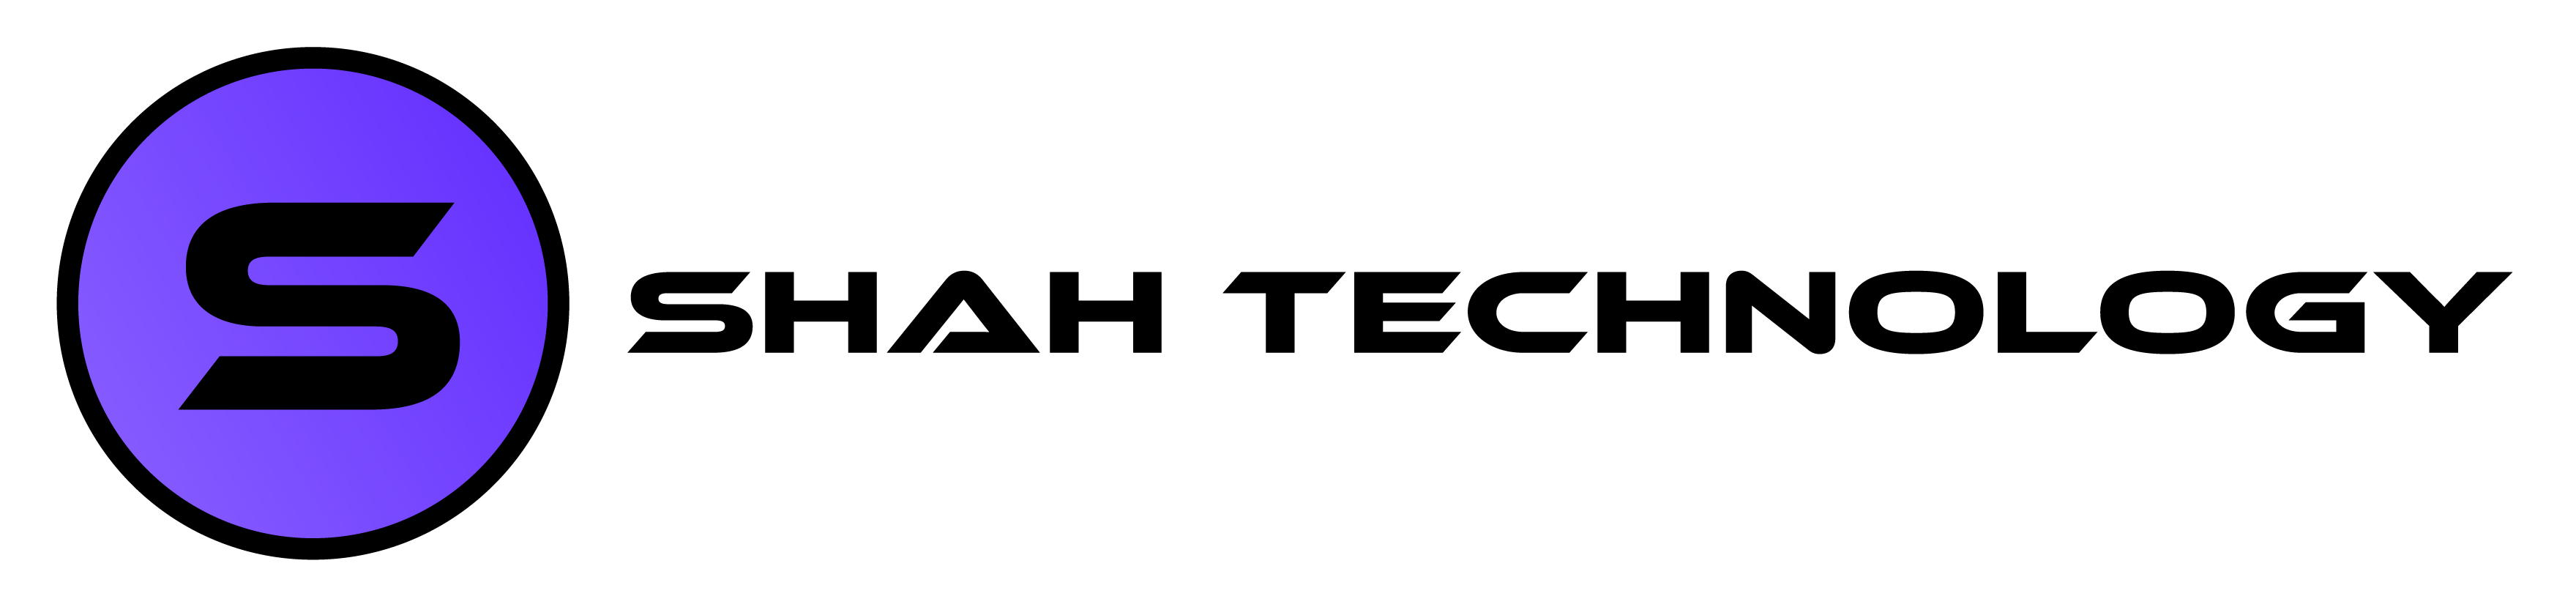 Logo - Black Version